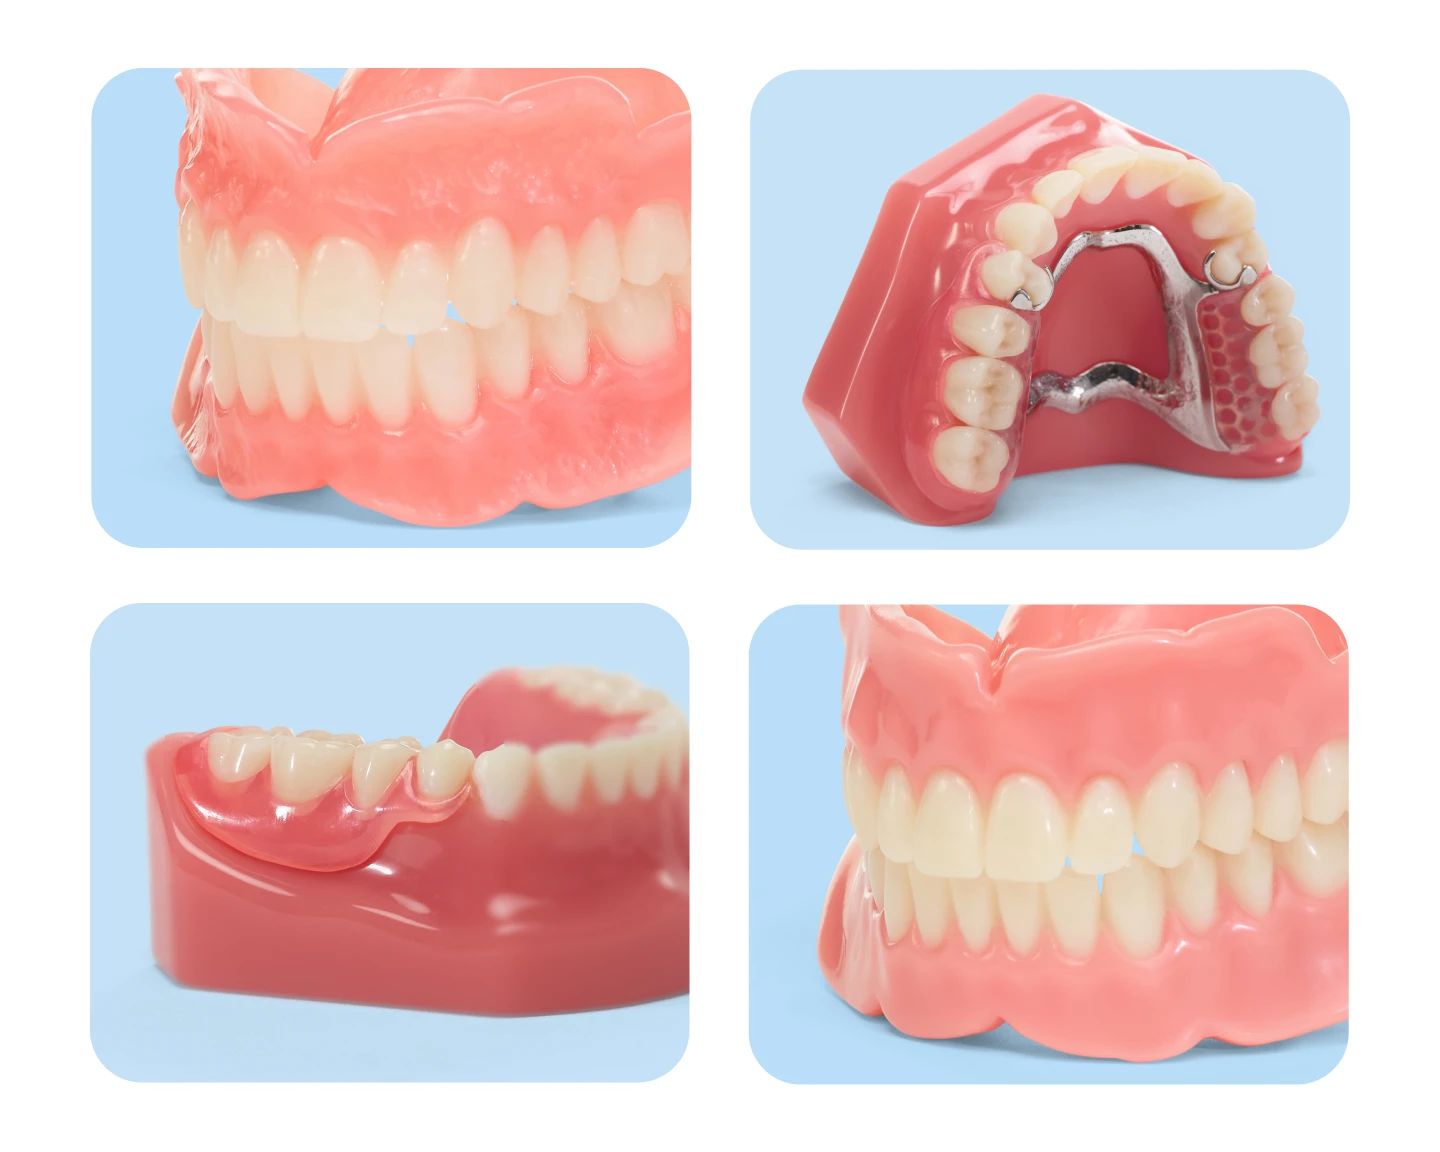 Types of Dentures at Aspen Dental